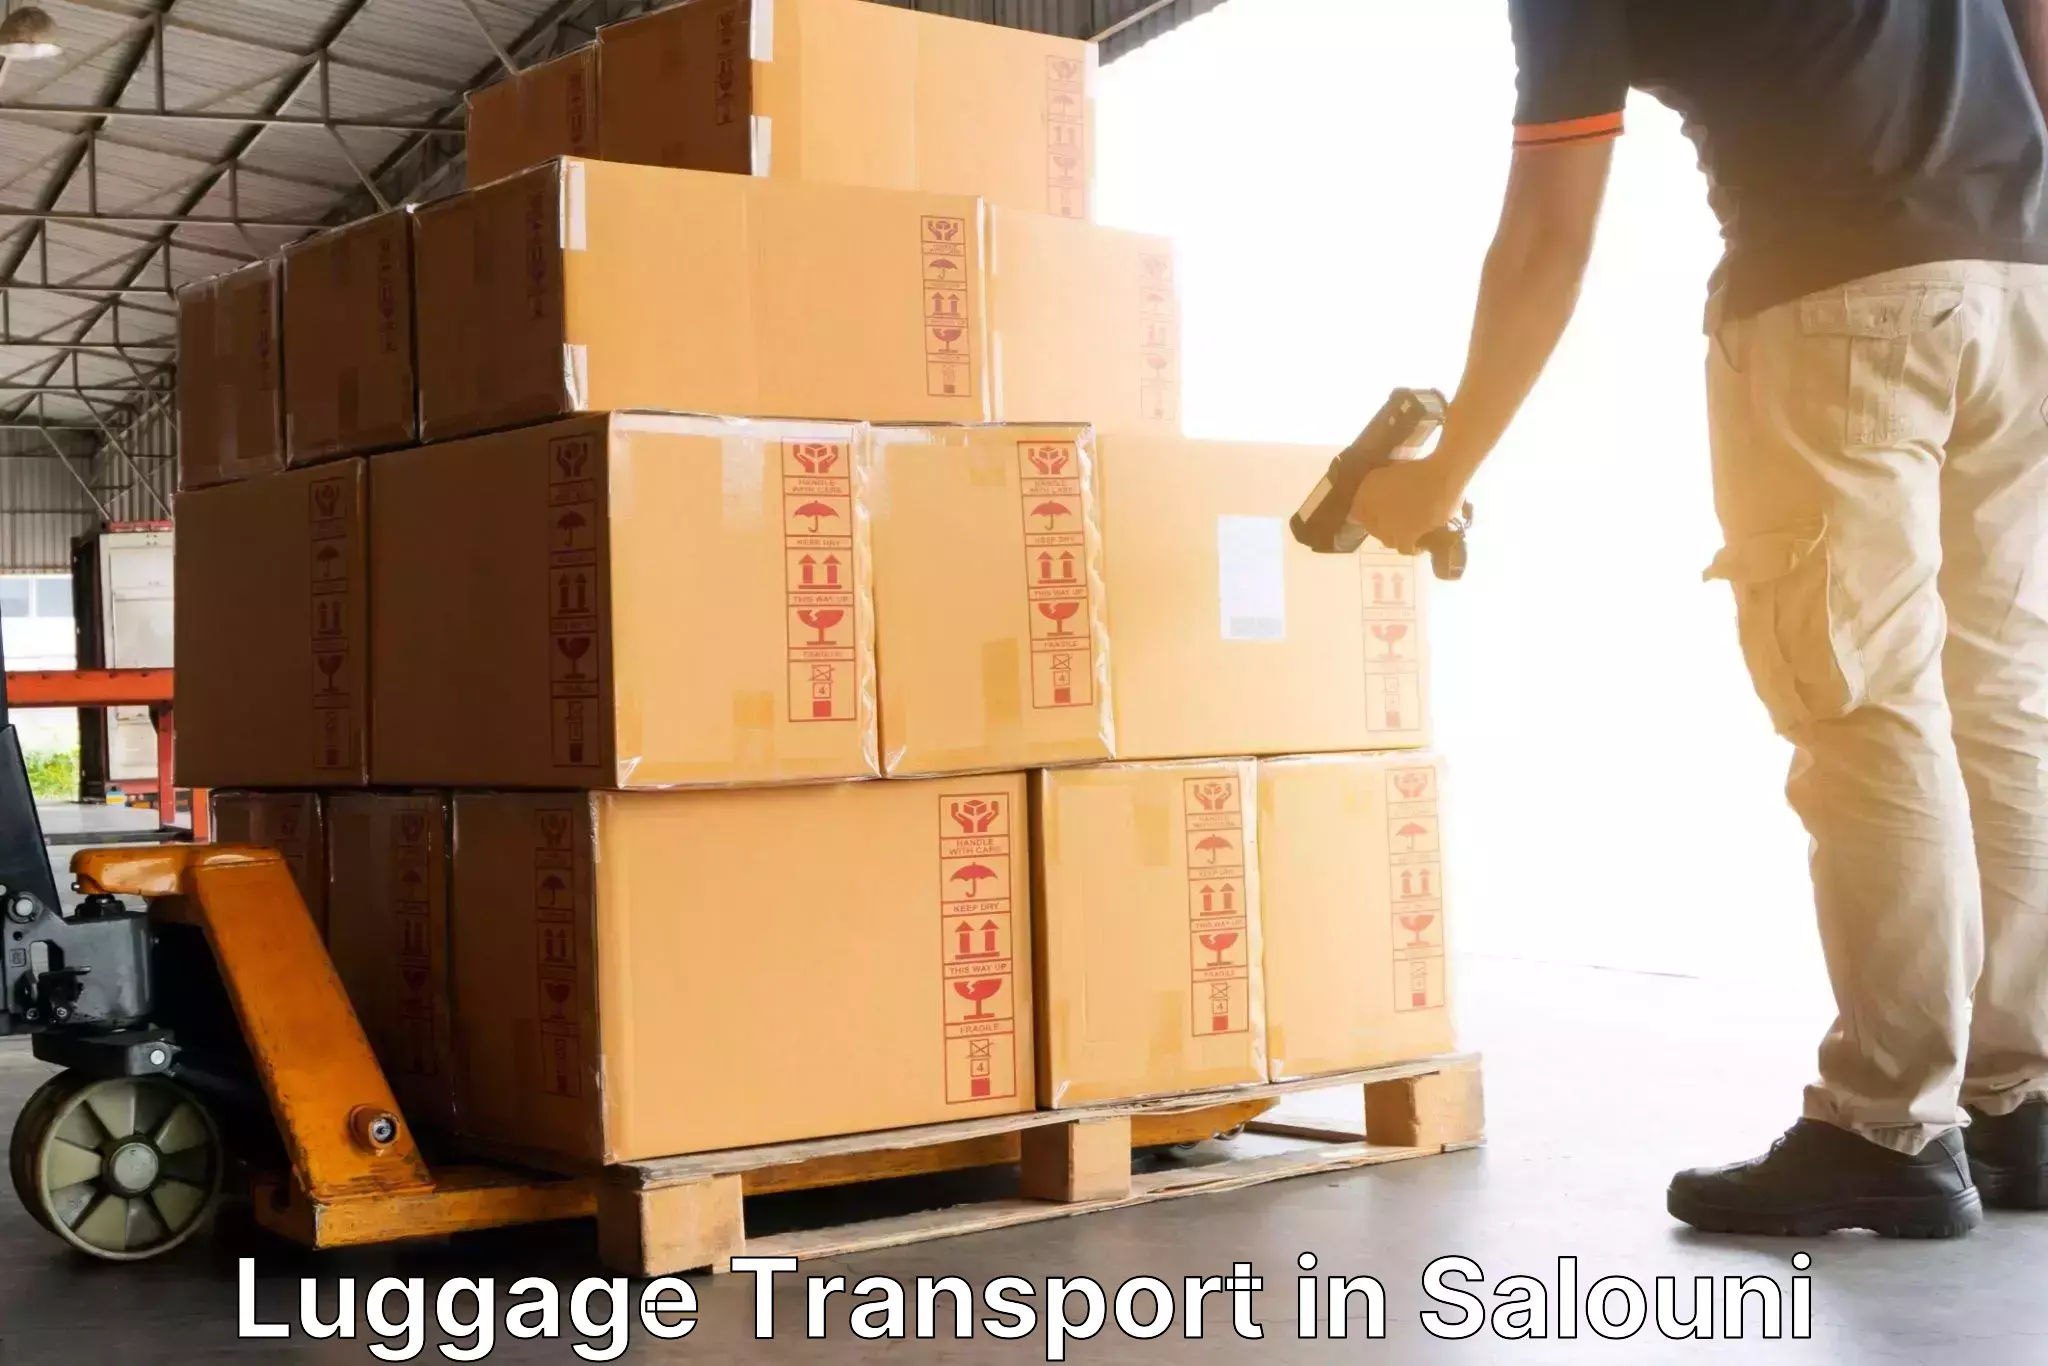 Doorstep luggage collection in Salouni